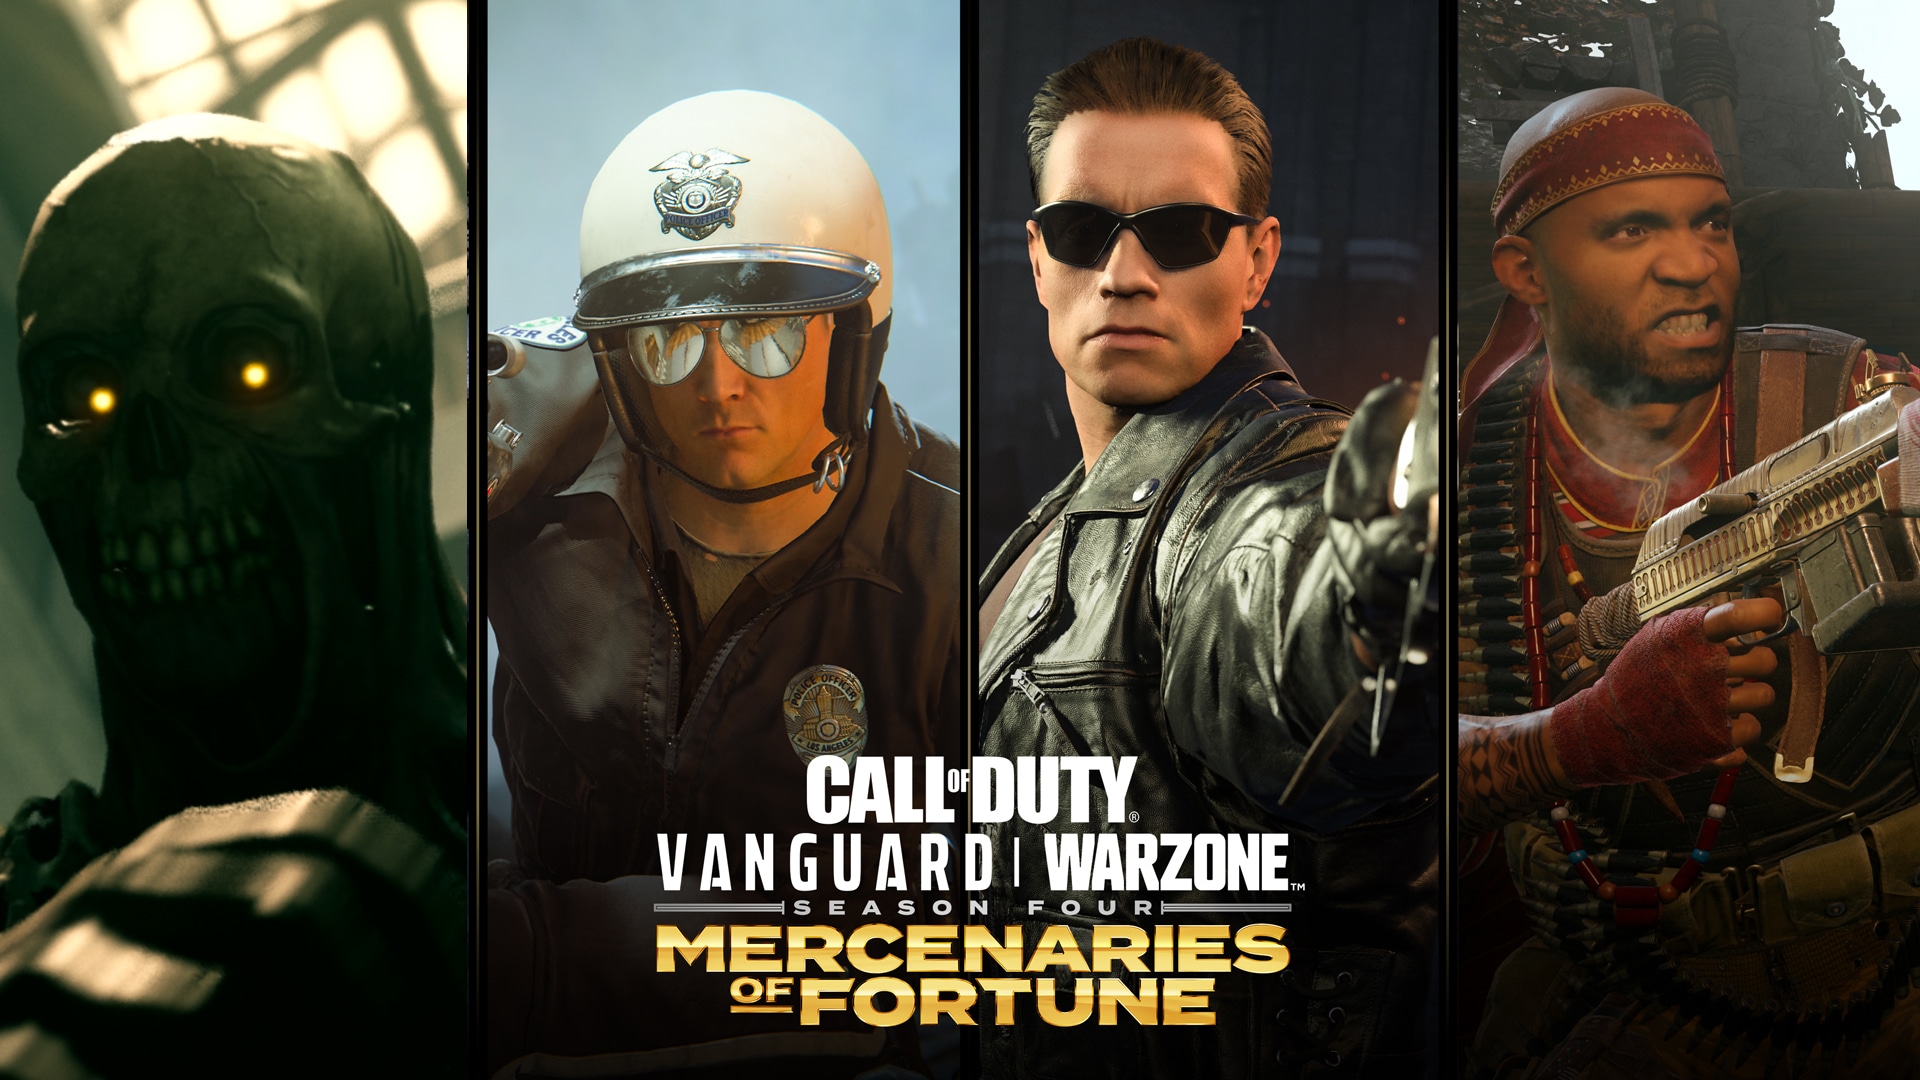 Mercenaries of Fortune —Mid-Season update features The Terminator in Warzone and Vanguard